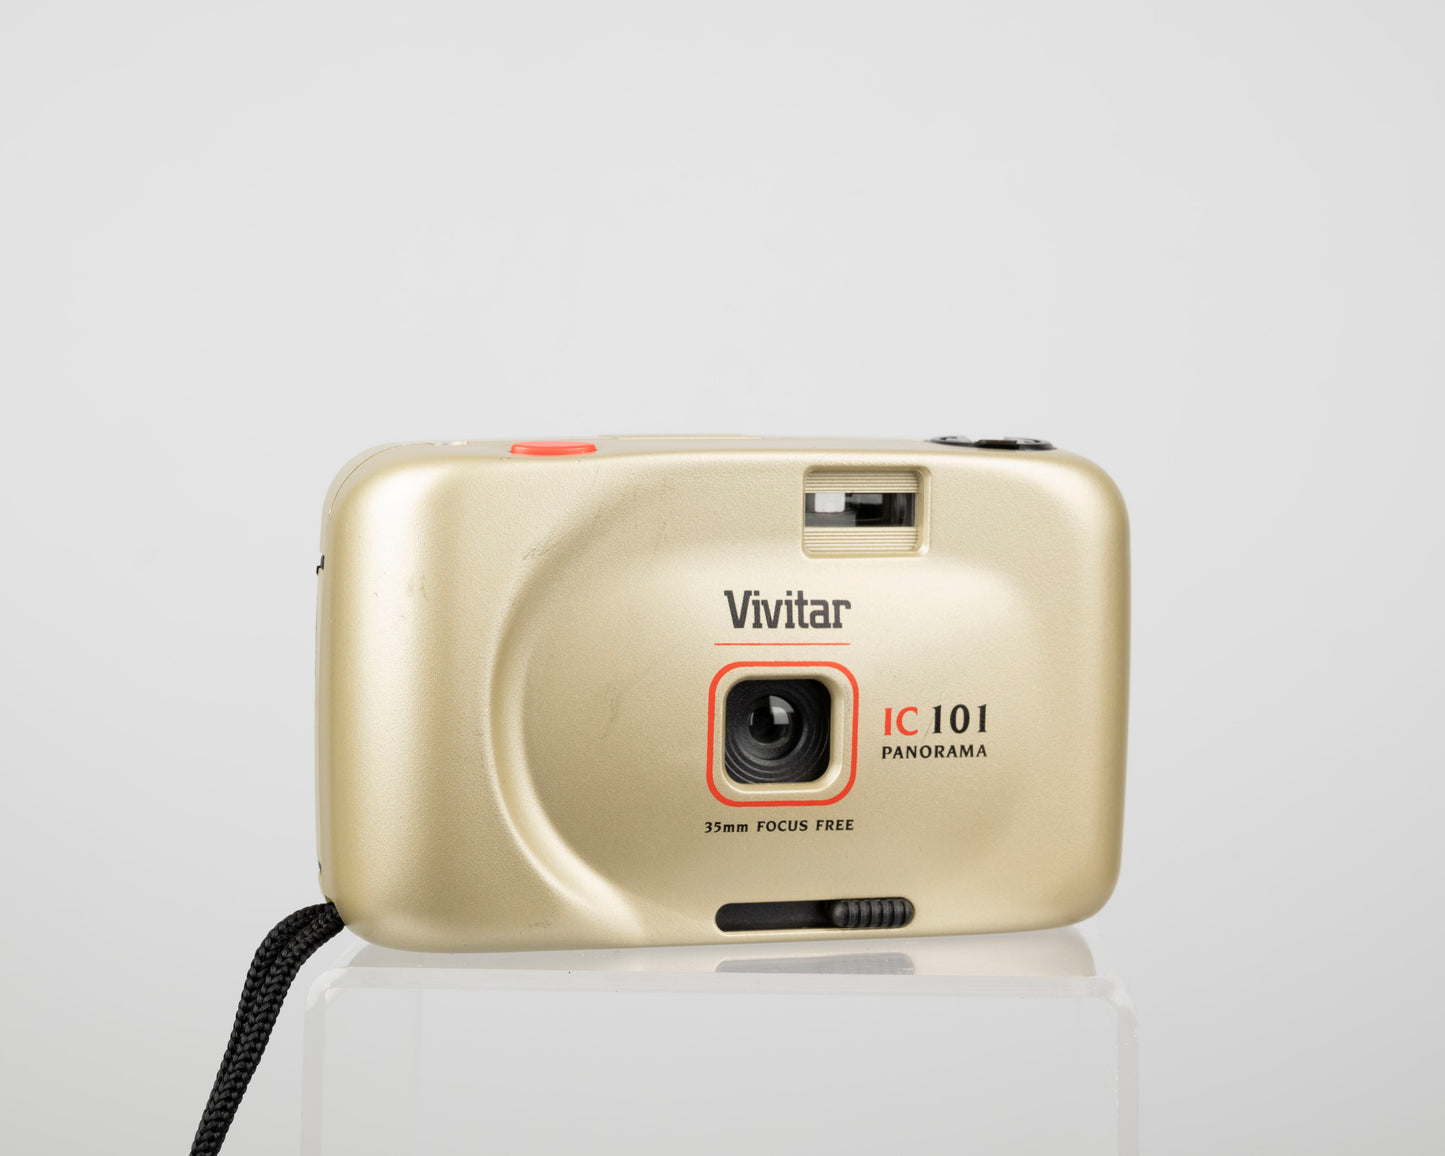 Appareil photo Vivitar IC 101 Panorama 35 mm avec boîte d'origine et manuel